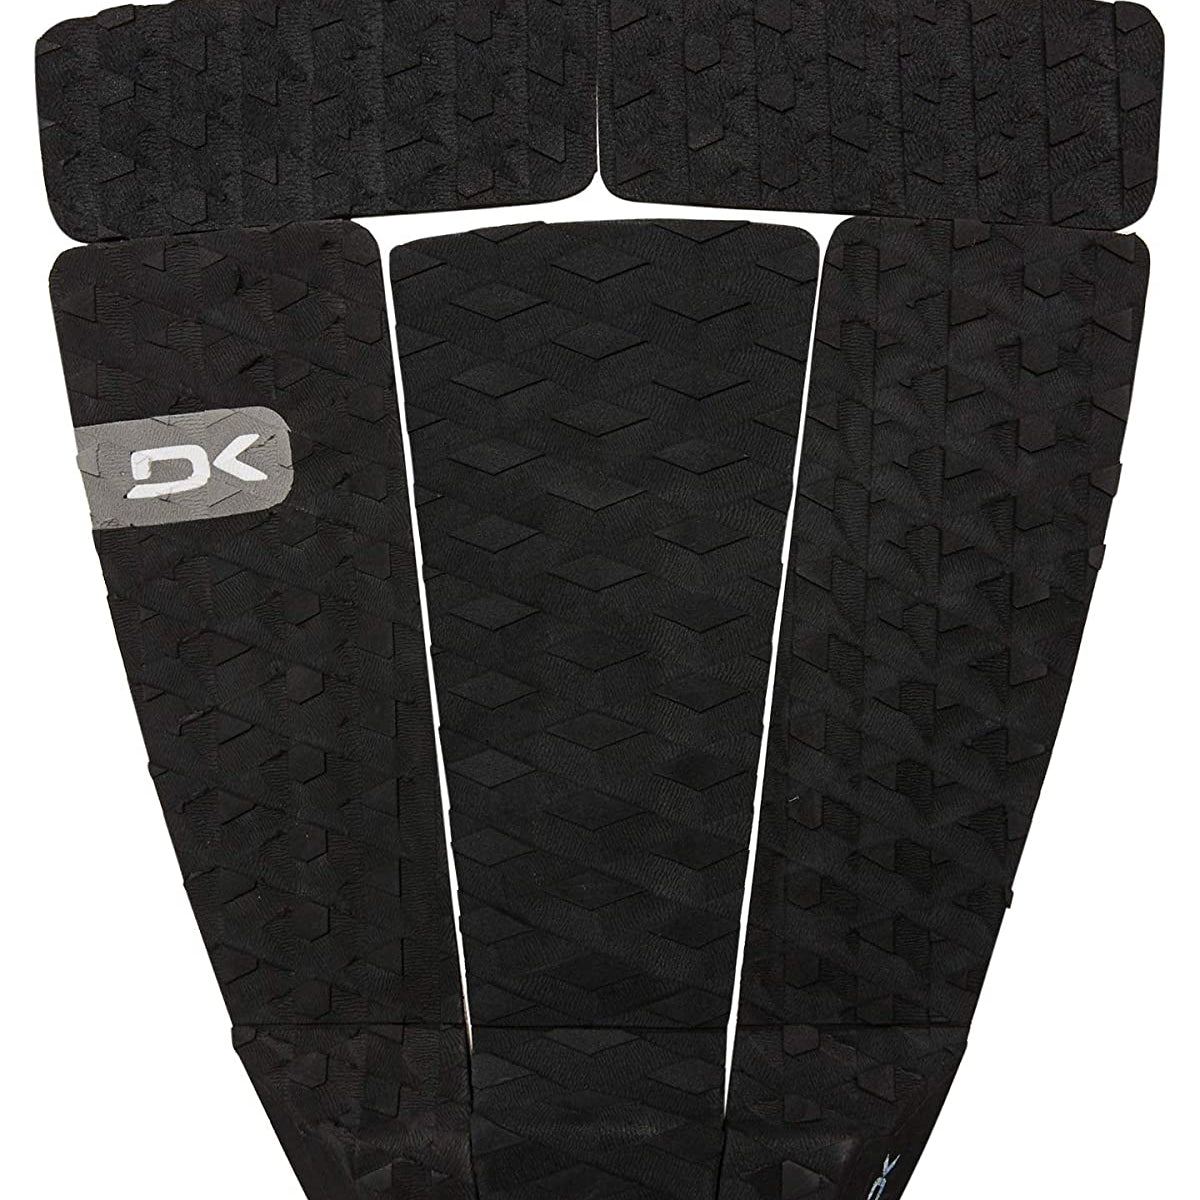 Dakine Bruce Irons Pro Traction Pad 001-Black